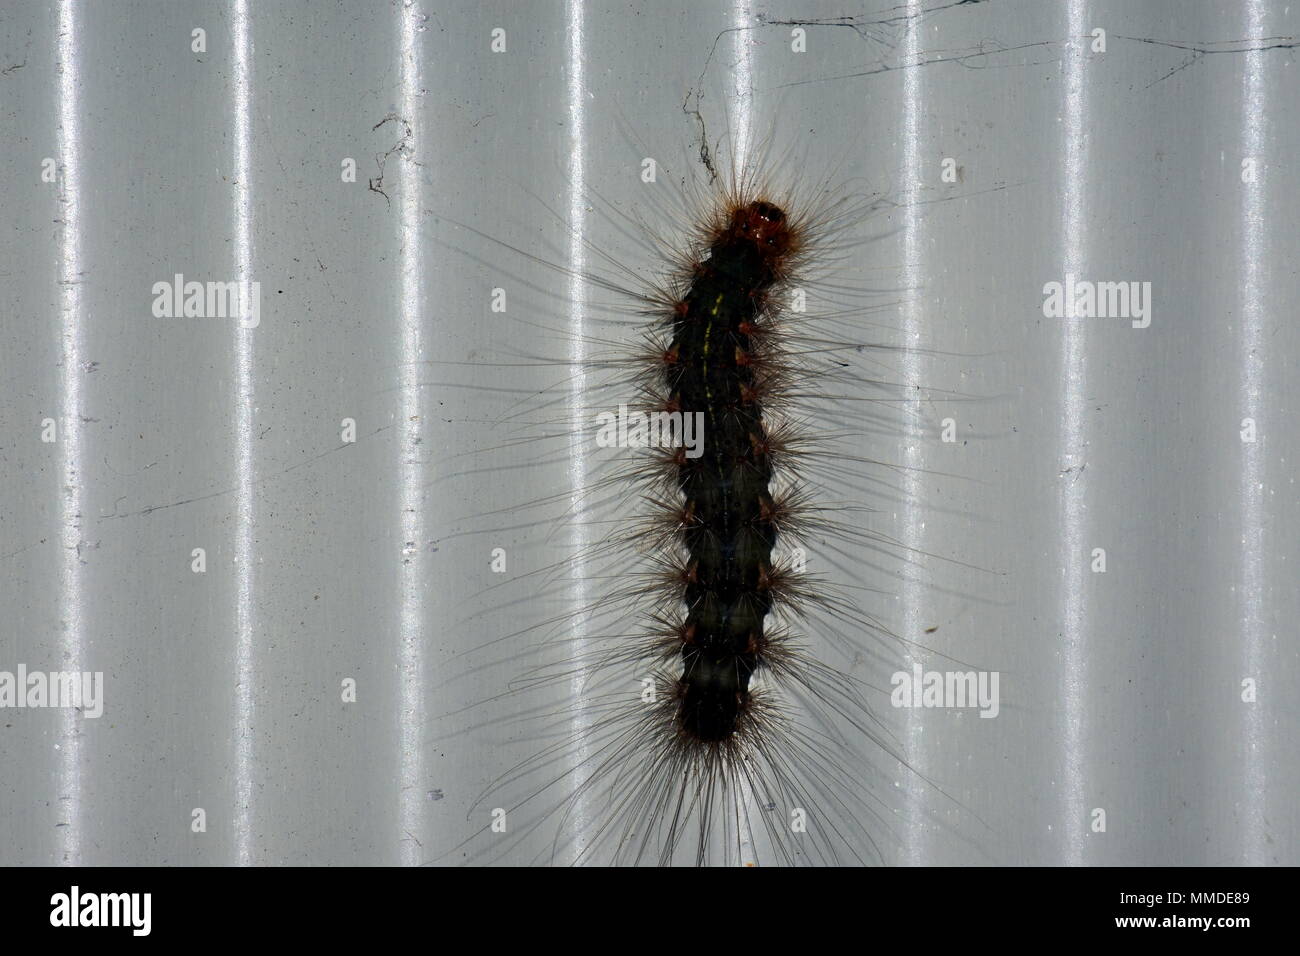 https://c8.alamy.com/comp/MMDE89/white-cedar-moth-caterpillar-leptocneria-reducta-MMDE89.jpg